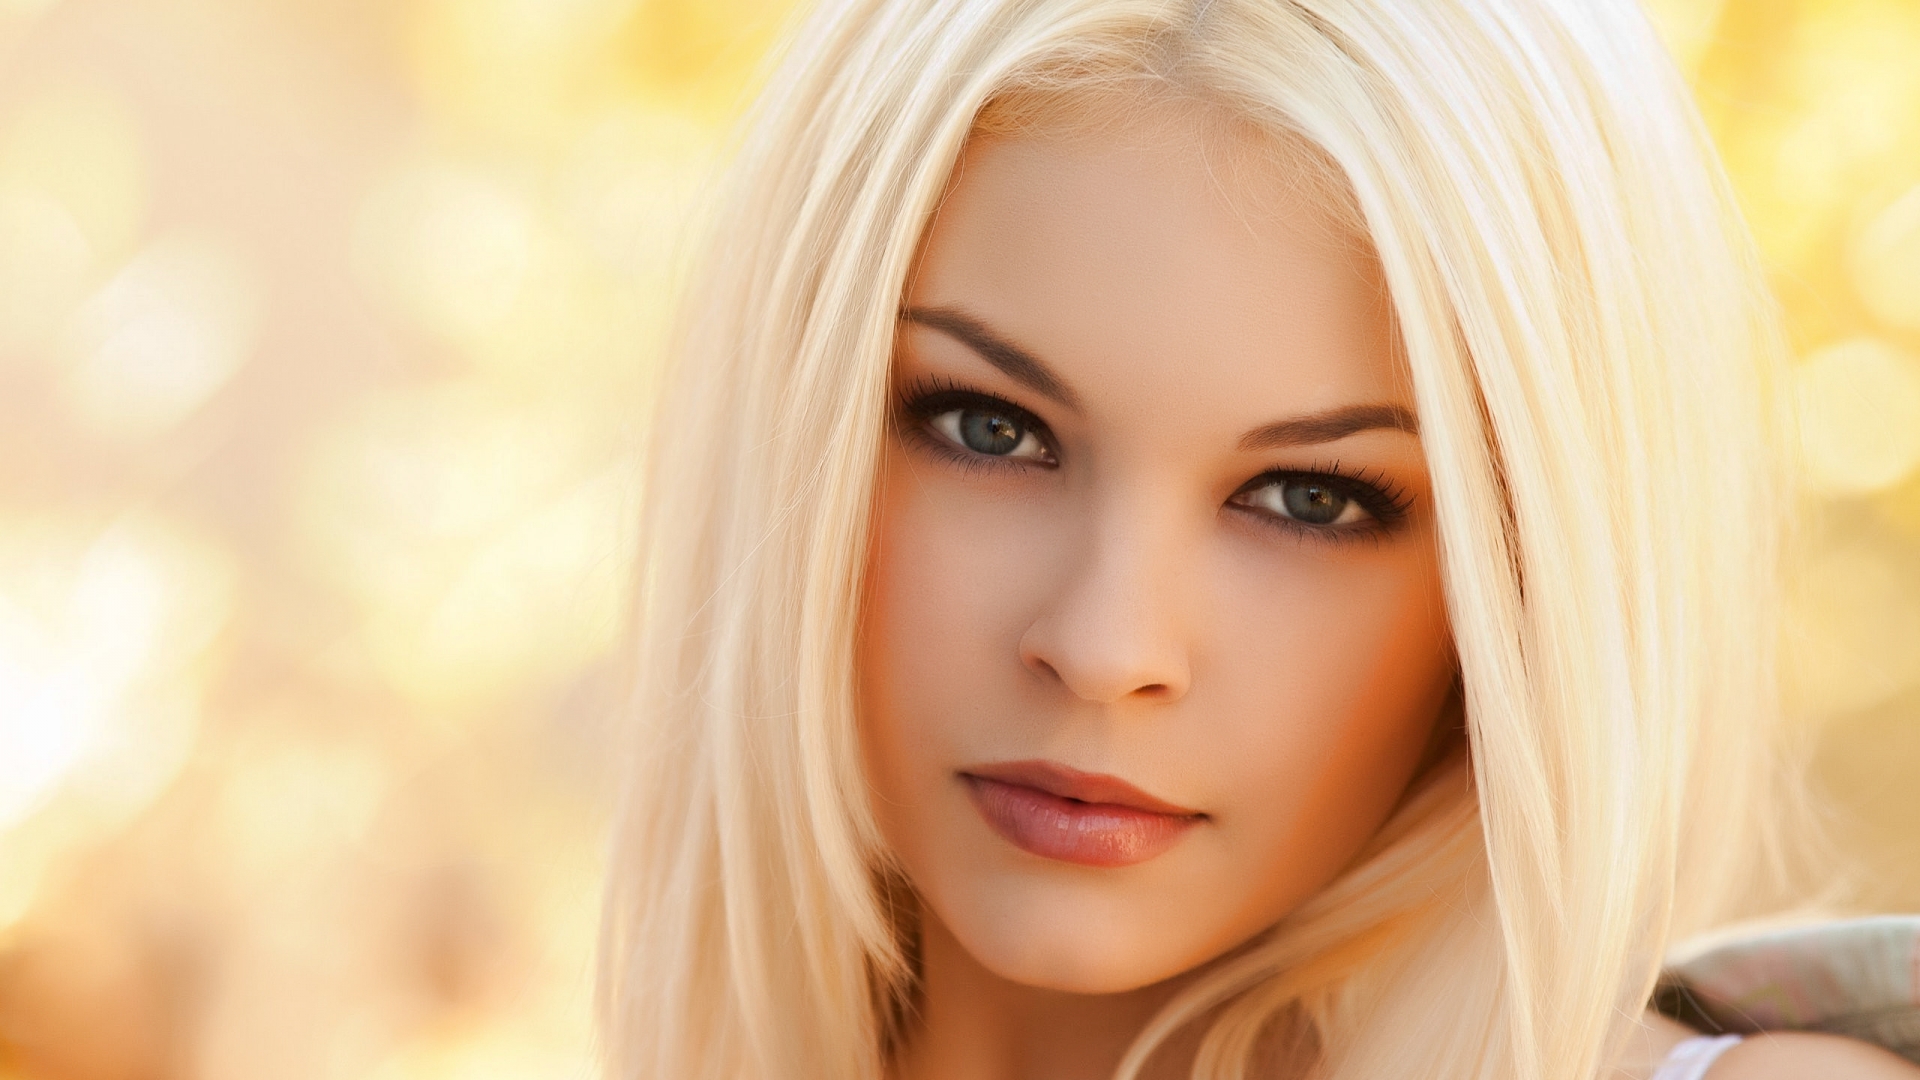 marvelous girl blonde hairstyle hd nice free image